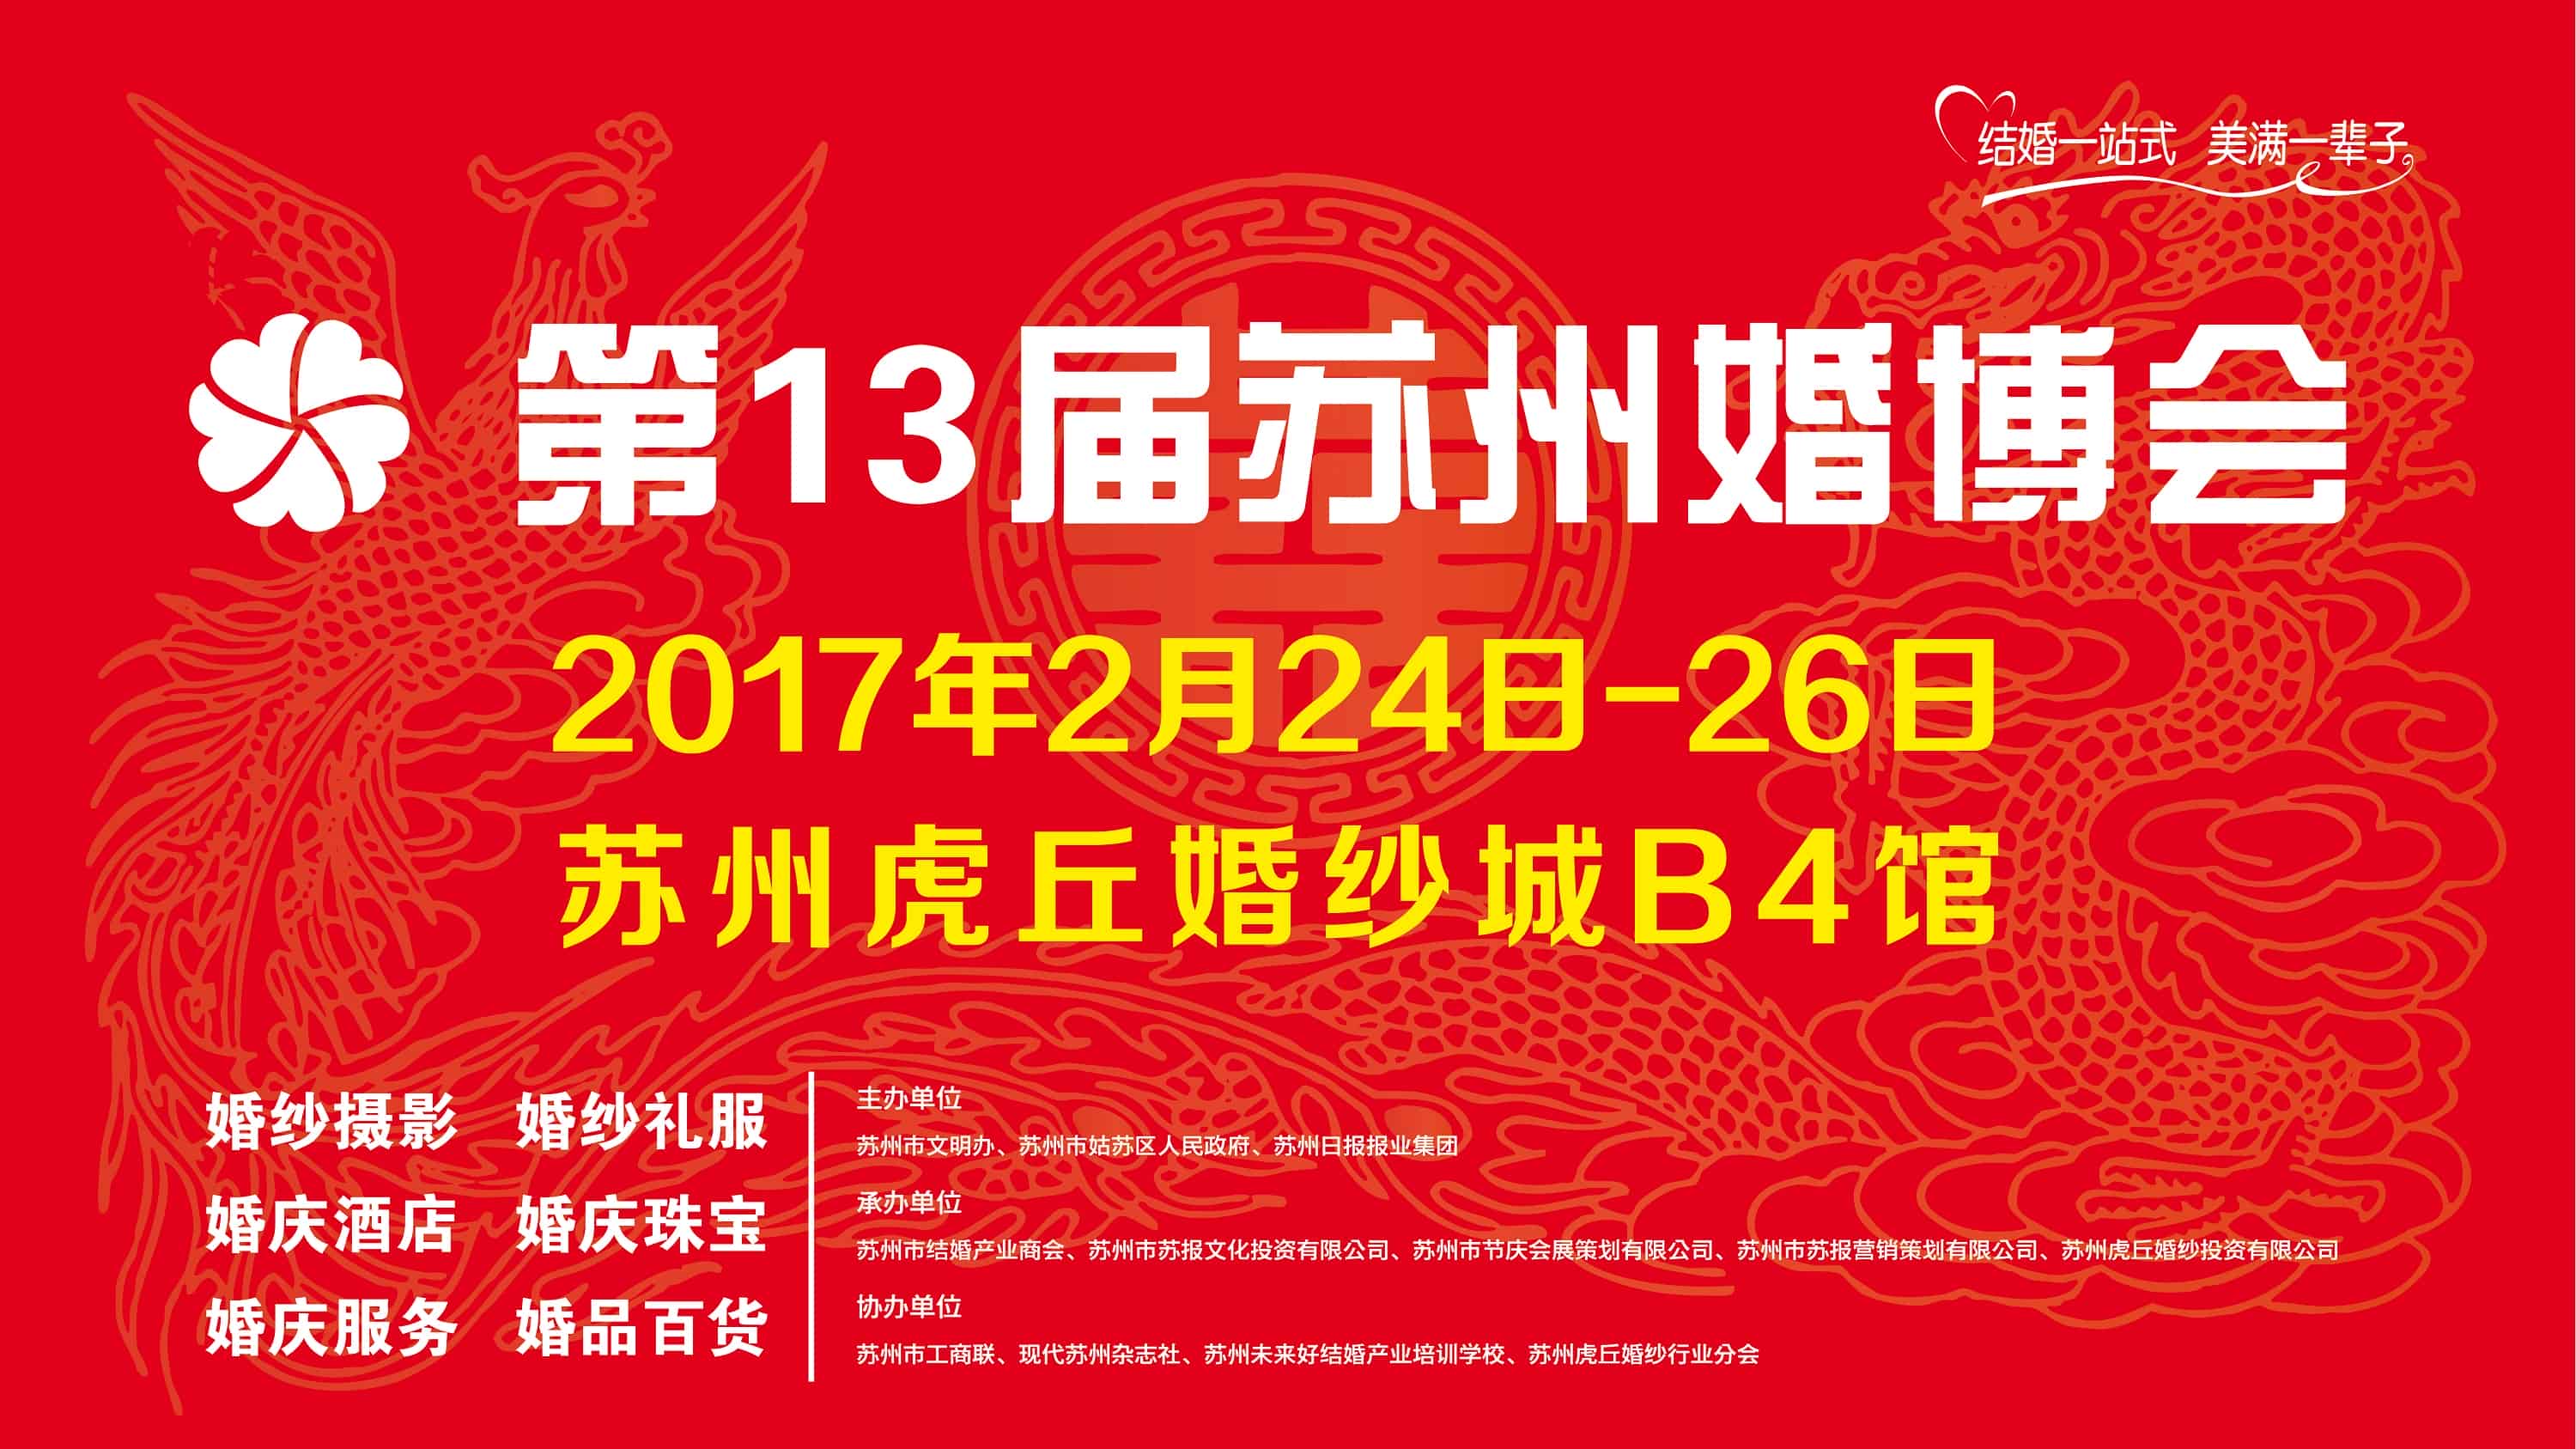 The 13th Suzhou Wedding Exposition